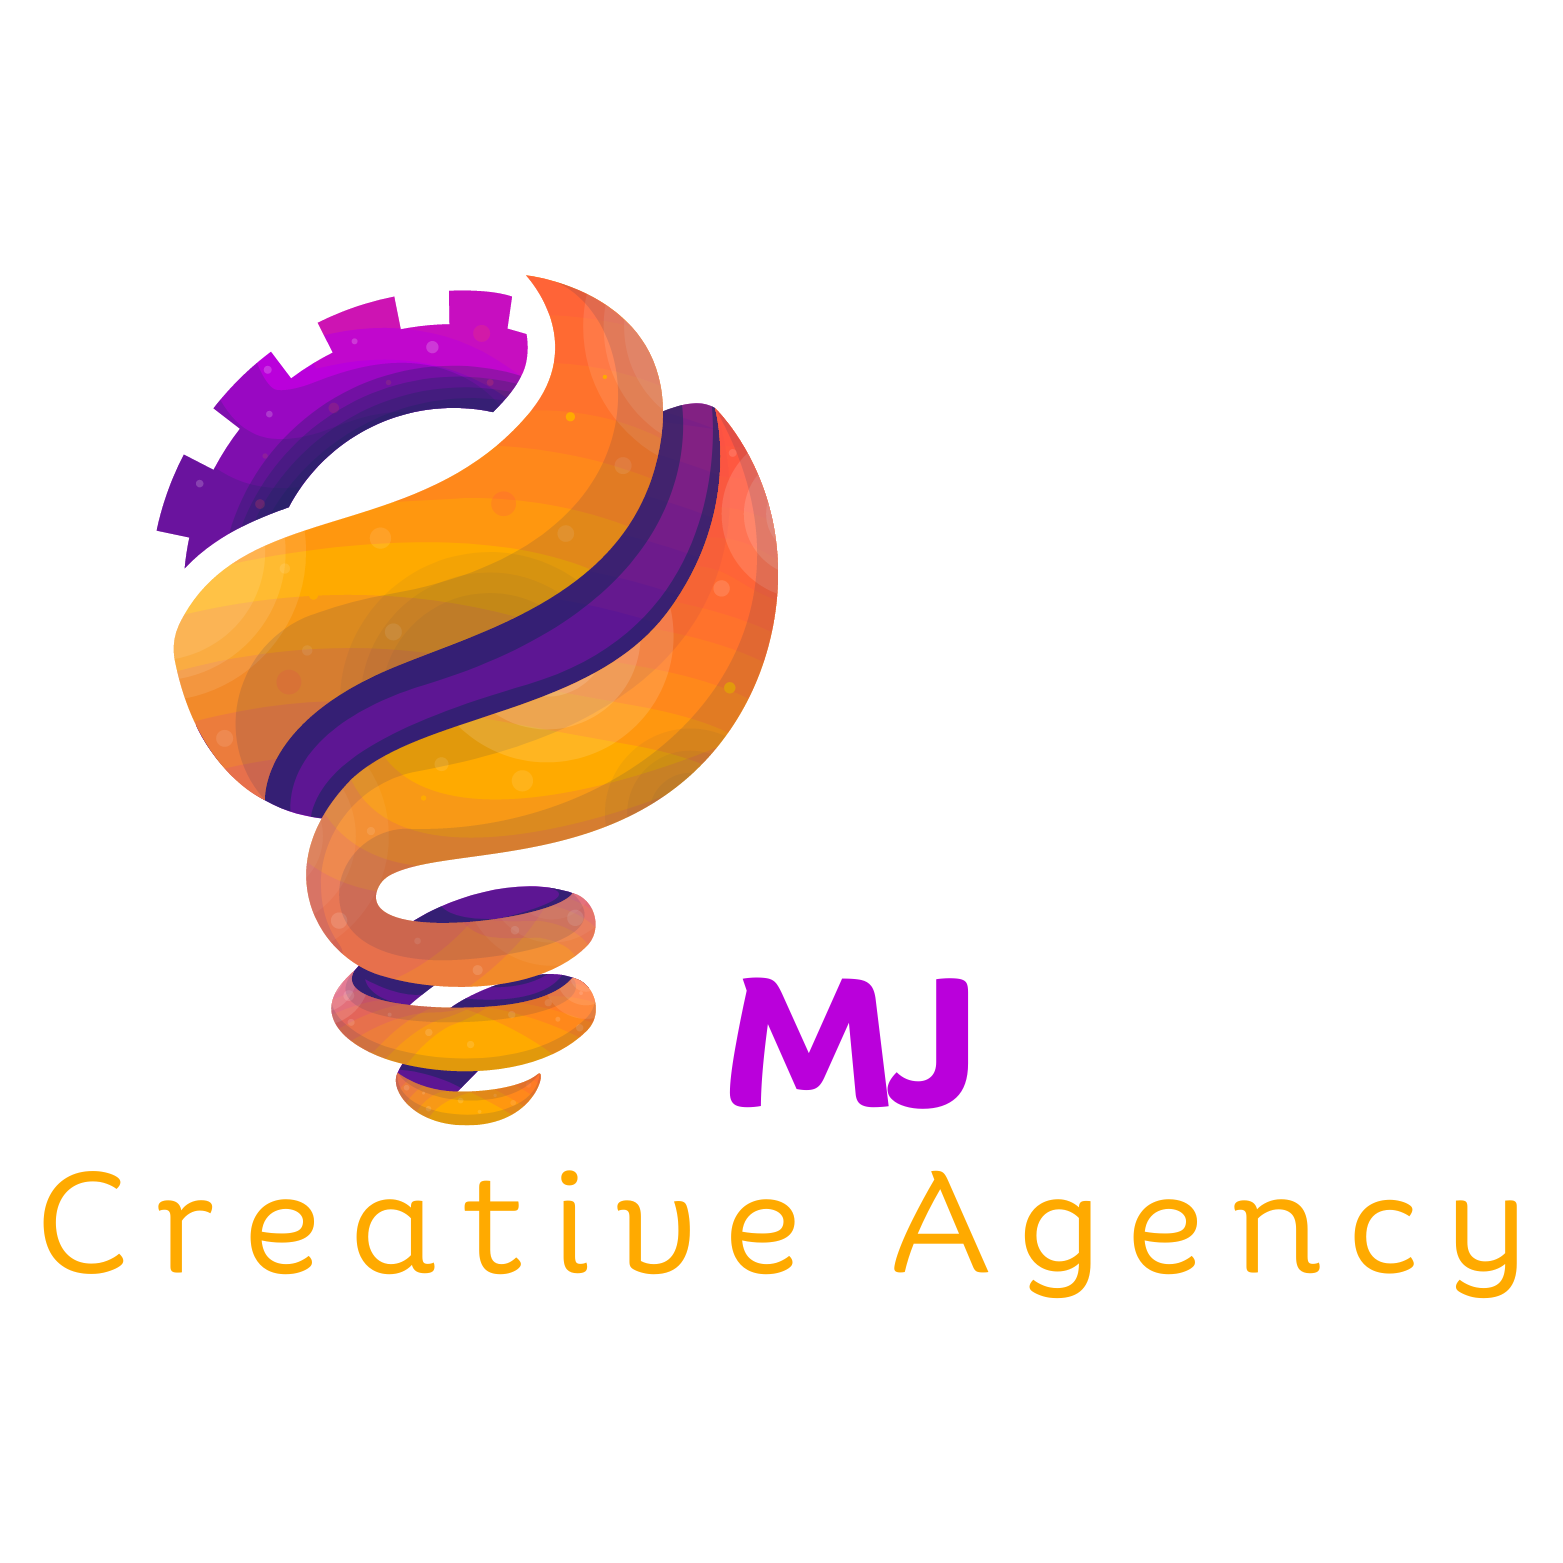 MJ Creative Agency